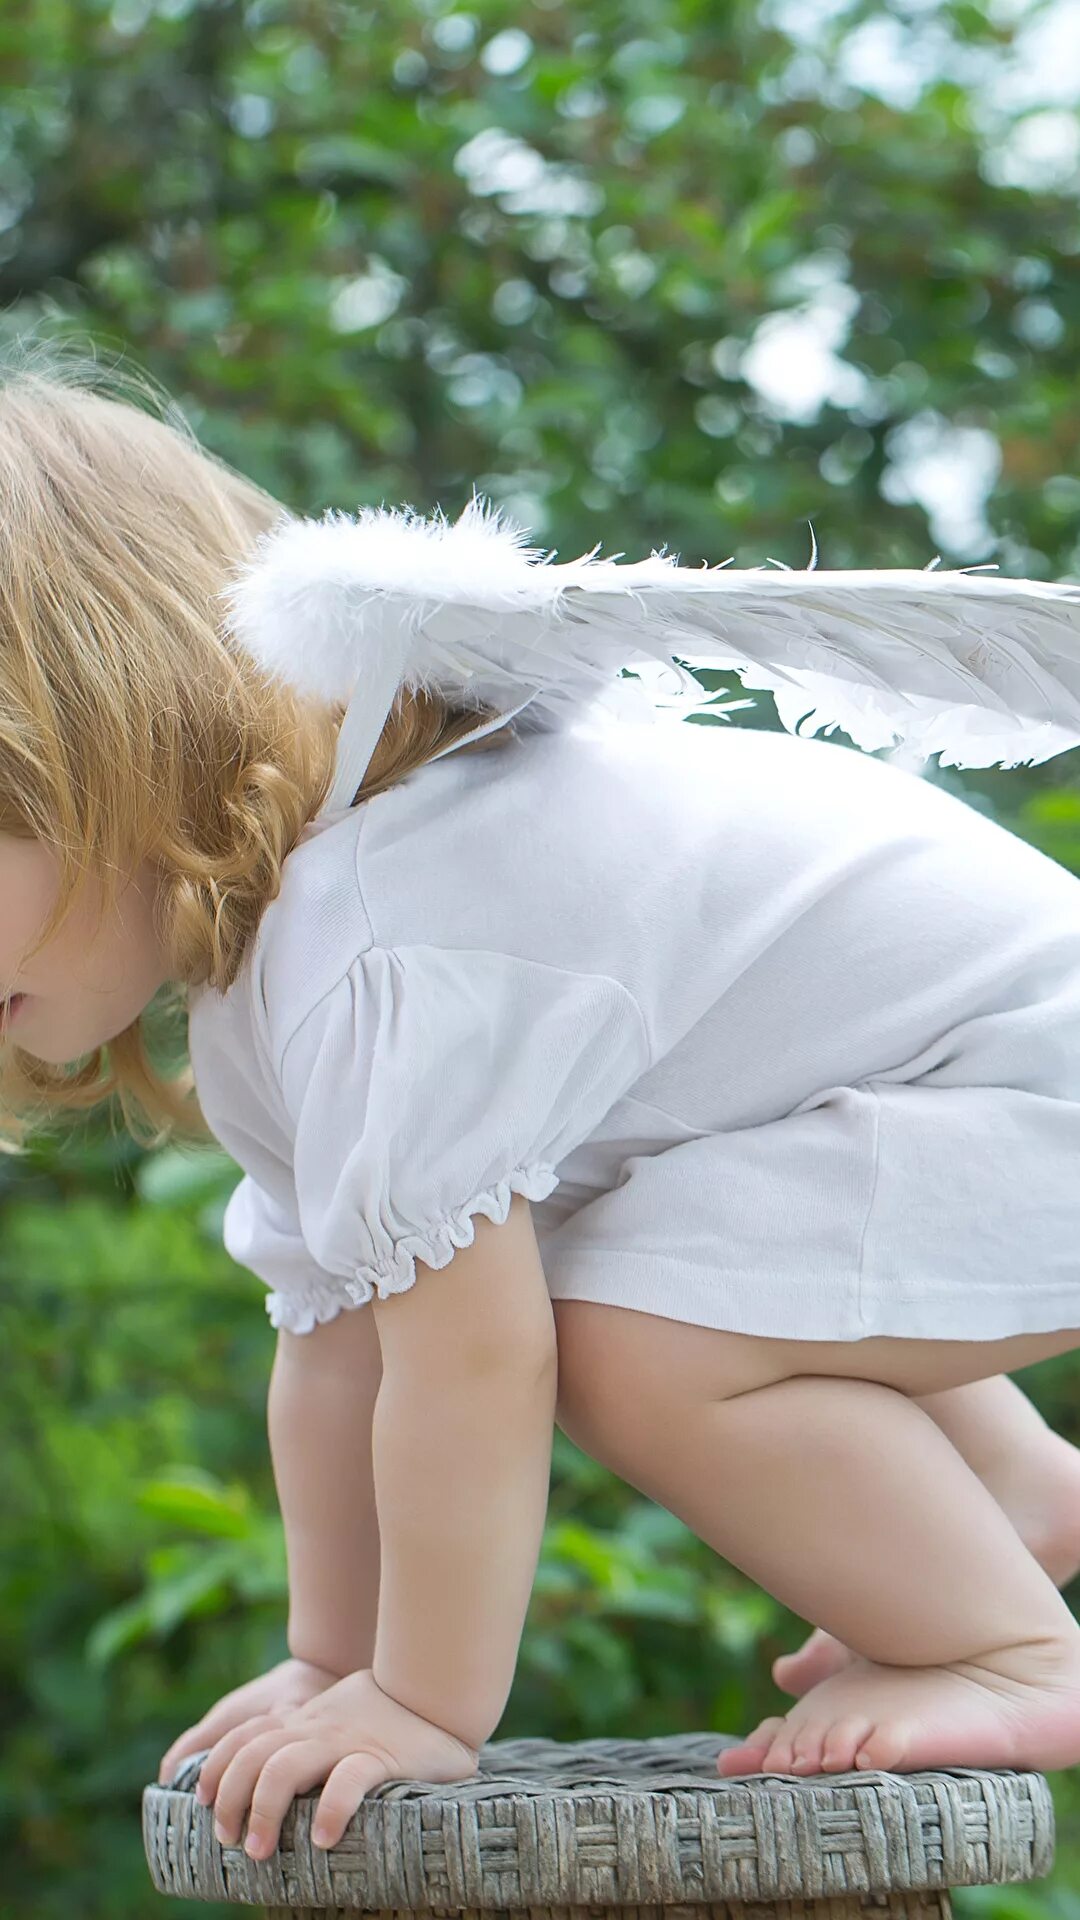 Натали ангел. Крылья для детей. Младенец с крылышками. Ребенок с крылышками ангела. Ангел девочка младенец.